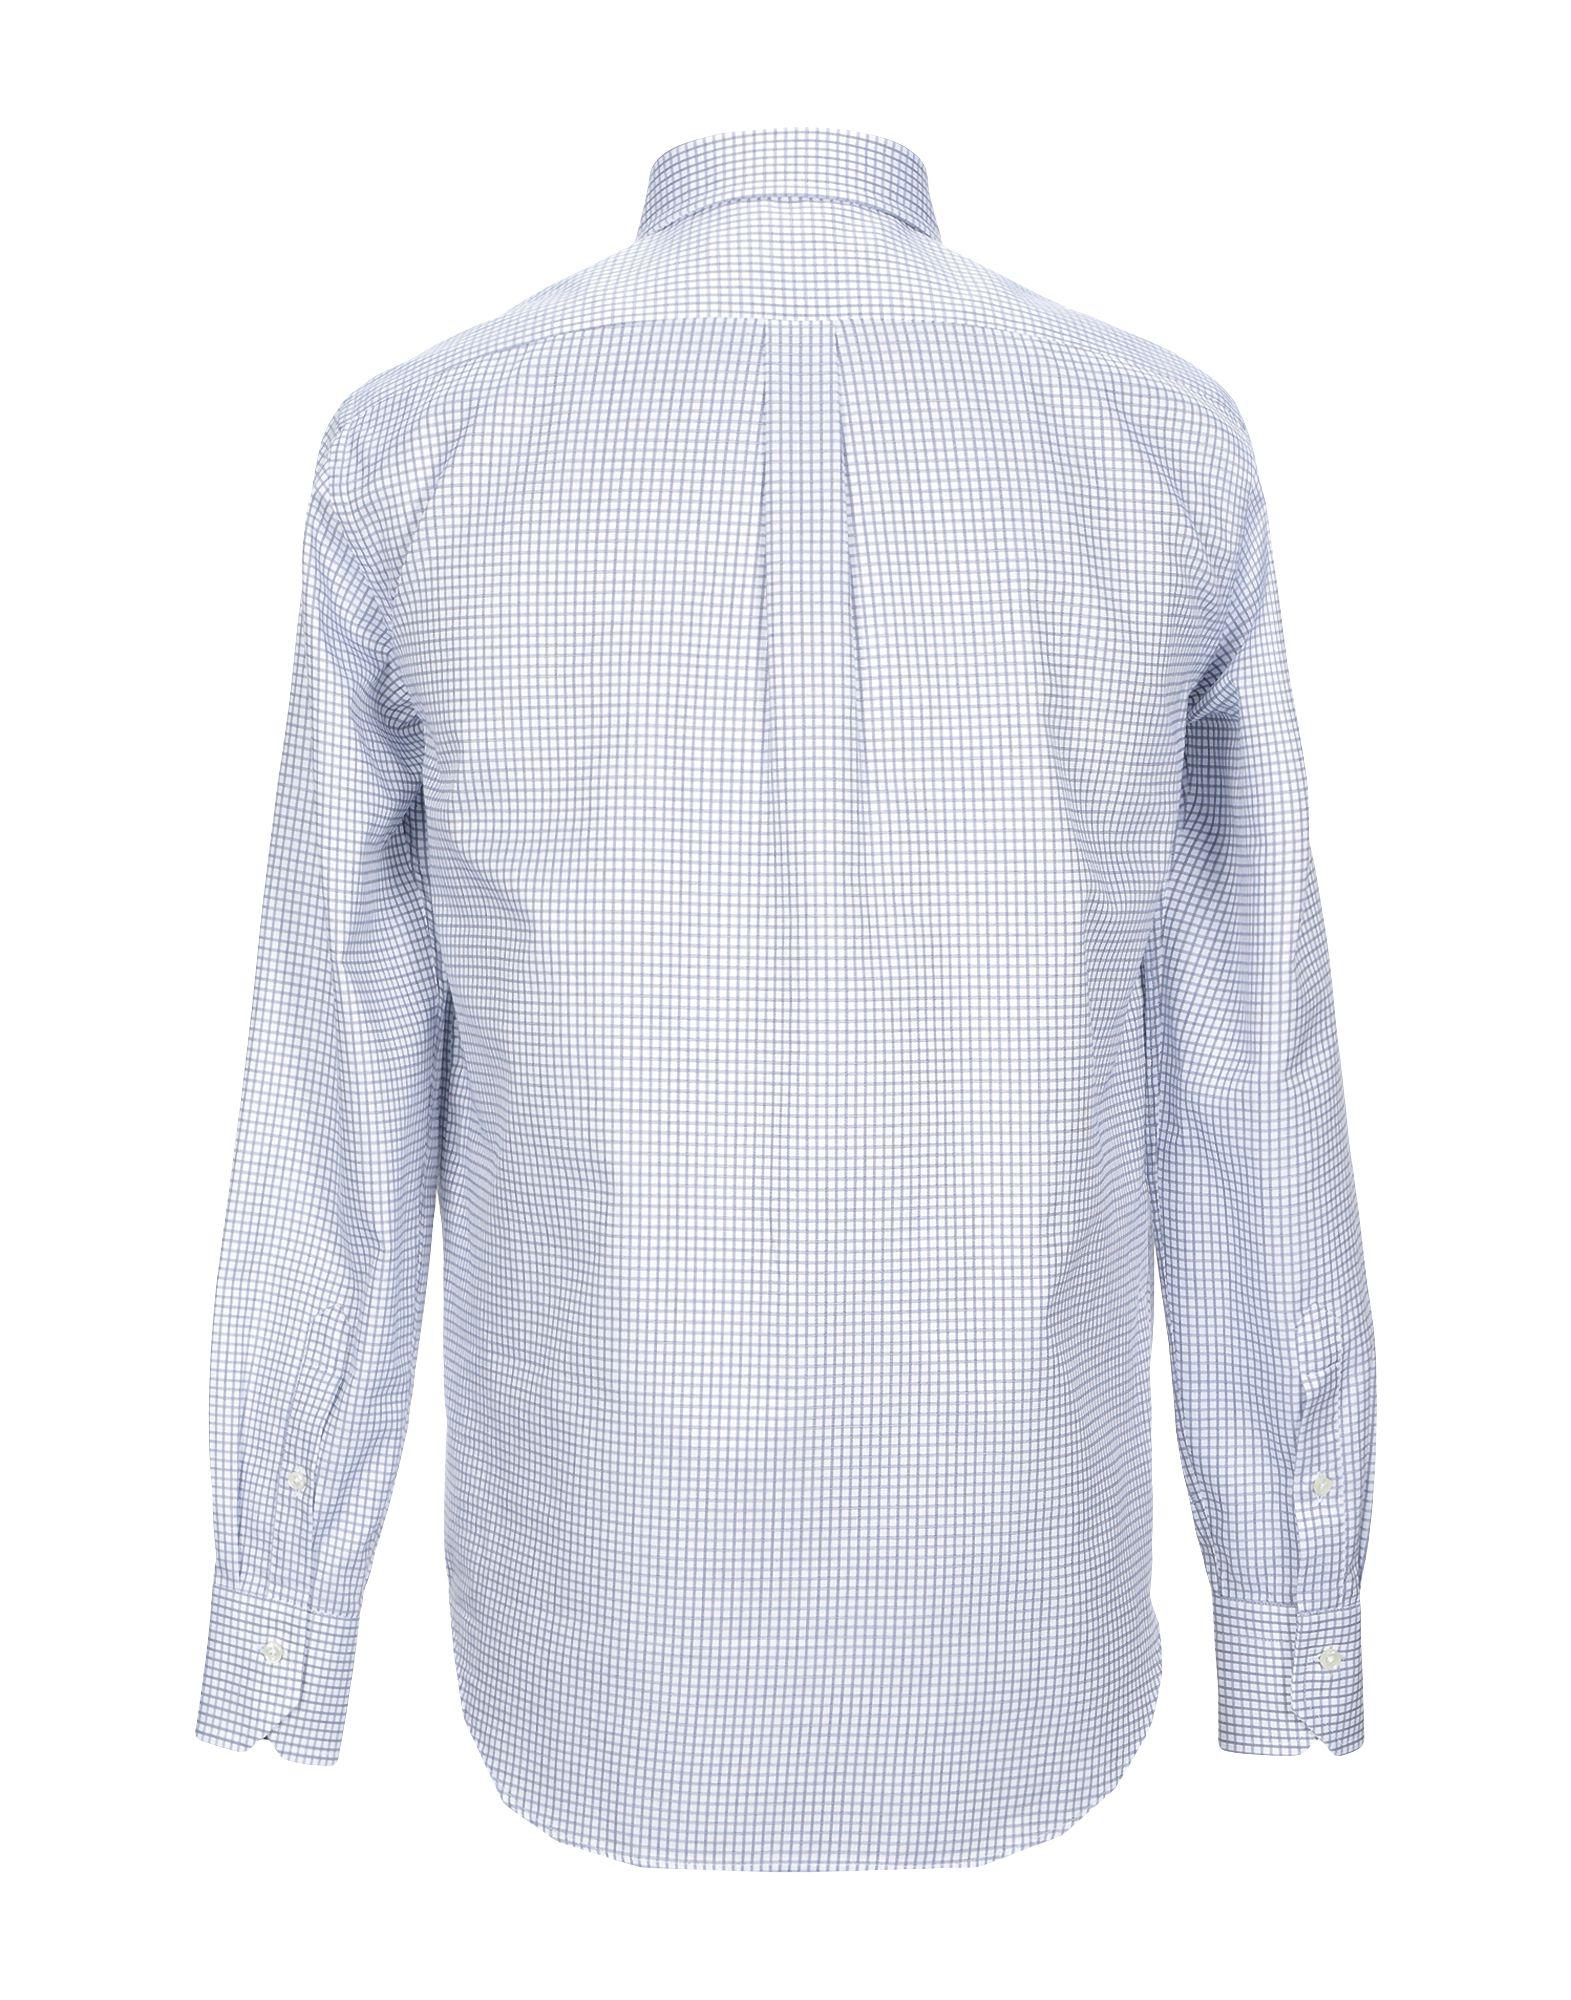 Emanuel Ungaro Cotton Shirt in Blue for Men - Lyst